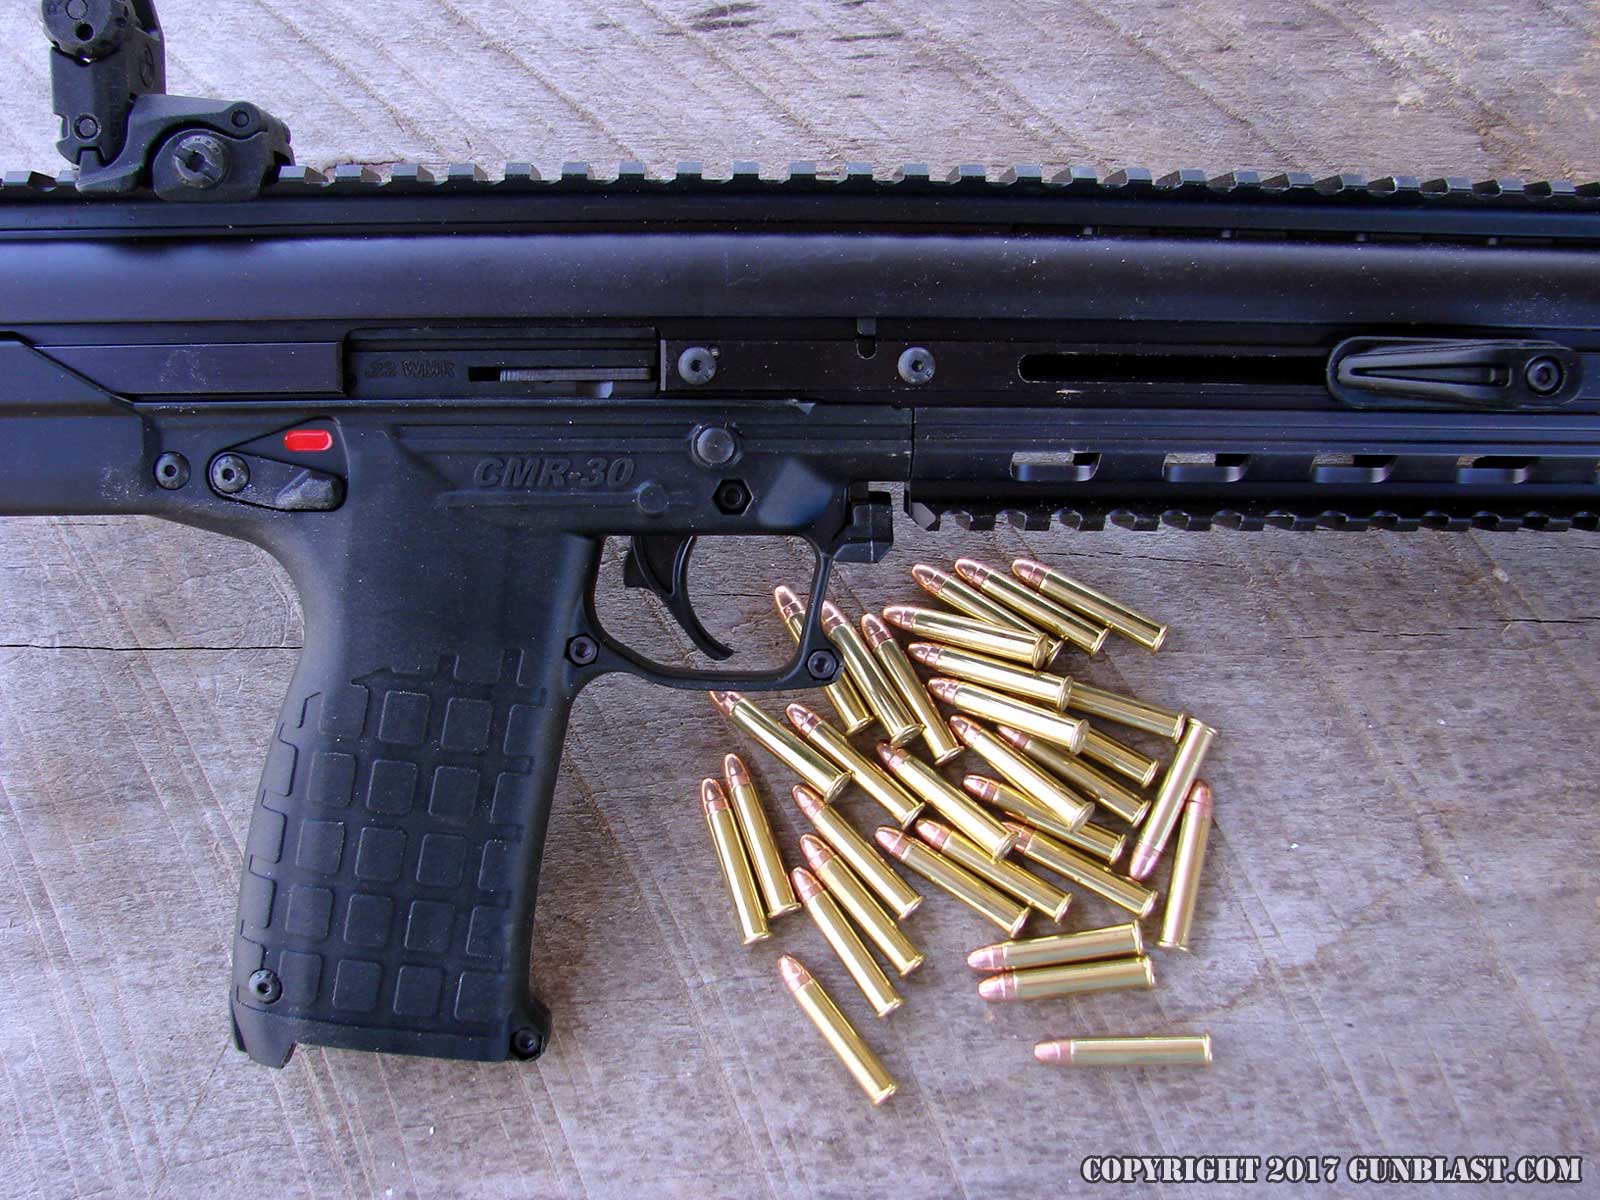 CMR-30 holds 31 shots of 22 Magnum ammunition. 